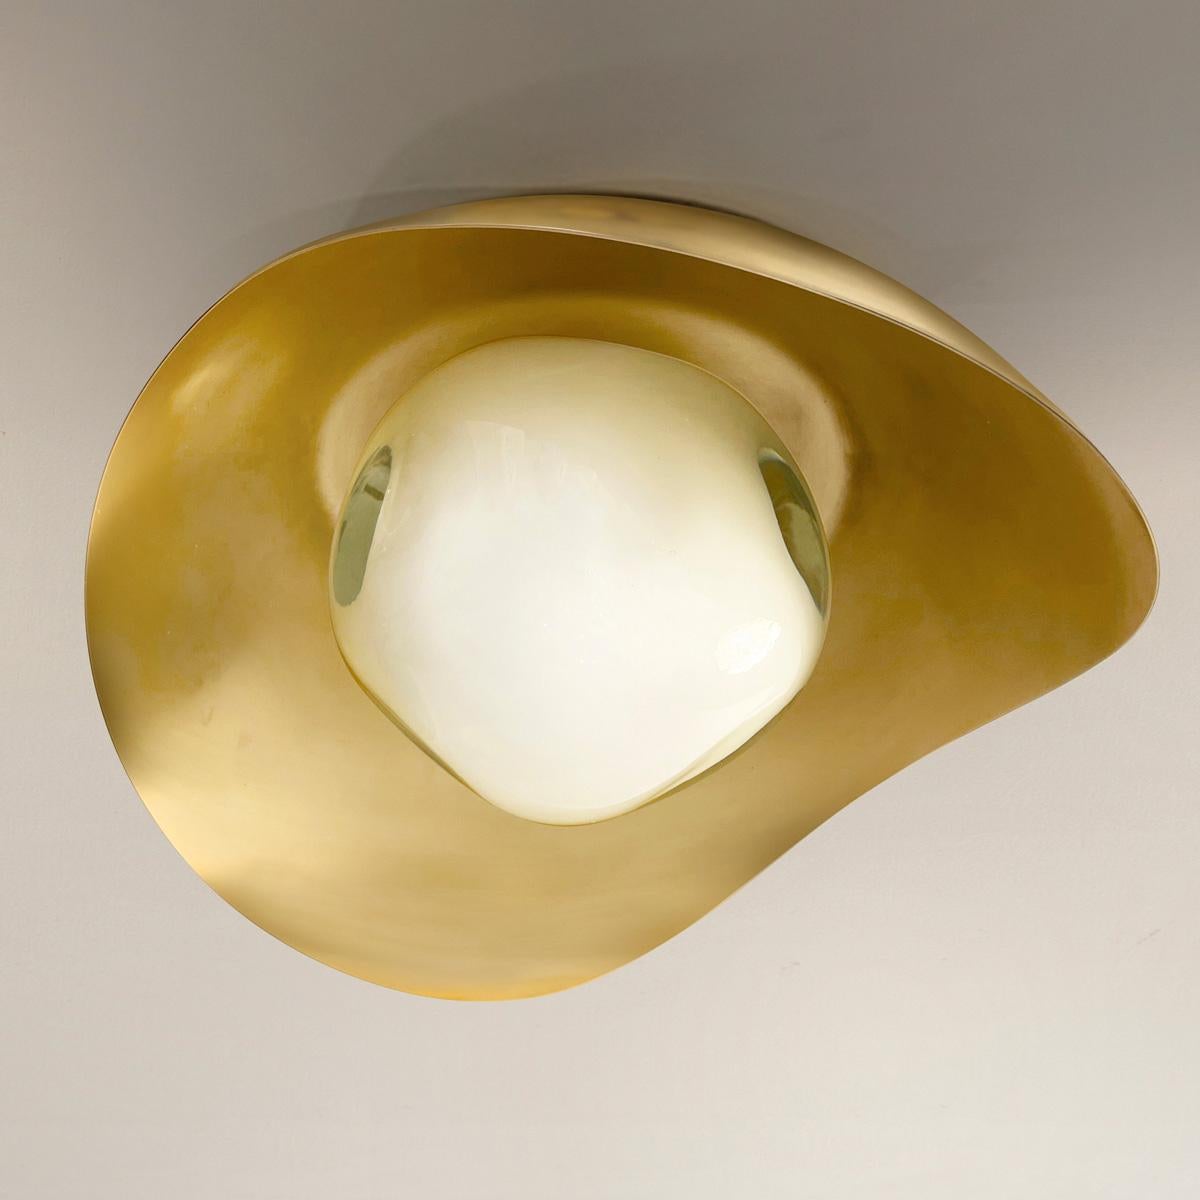 Italian Perla Flushmount Ceiling Light by Gaspare Asaro-Brass Finish For Sale